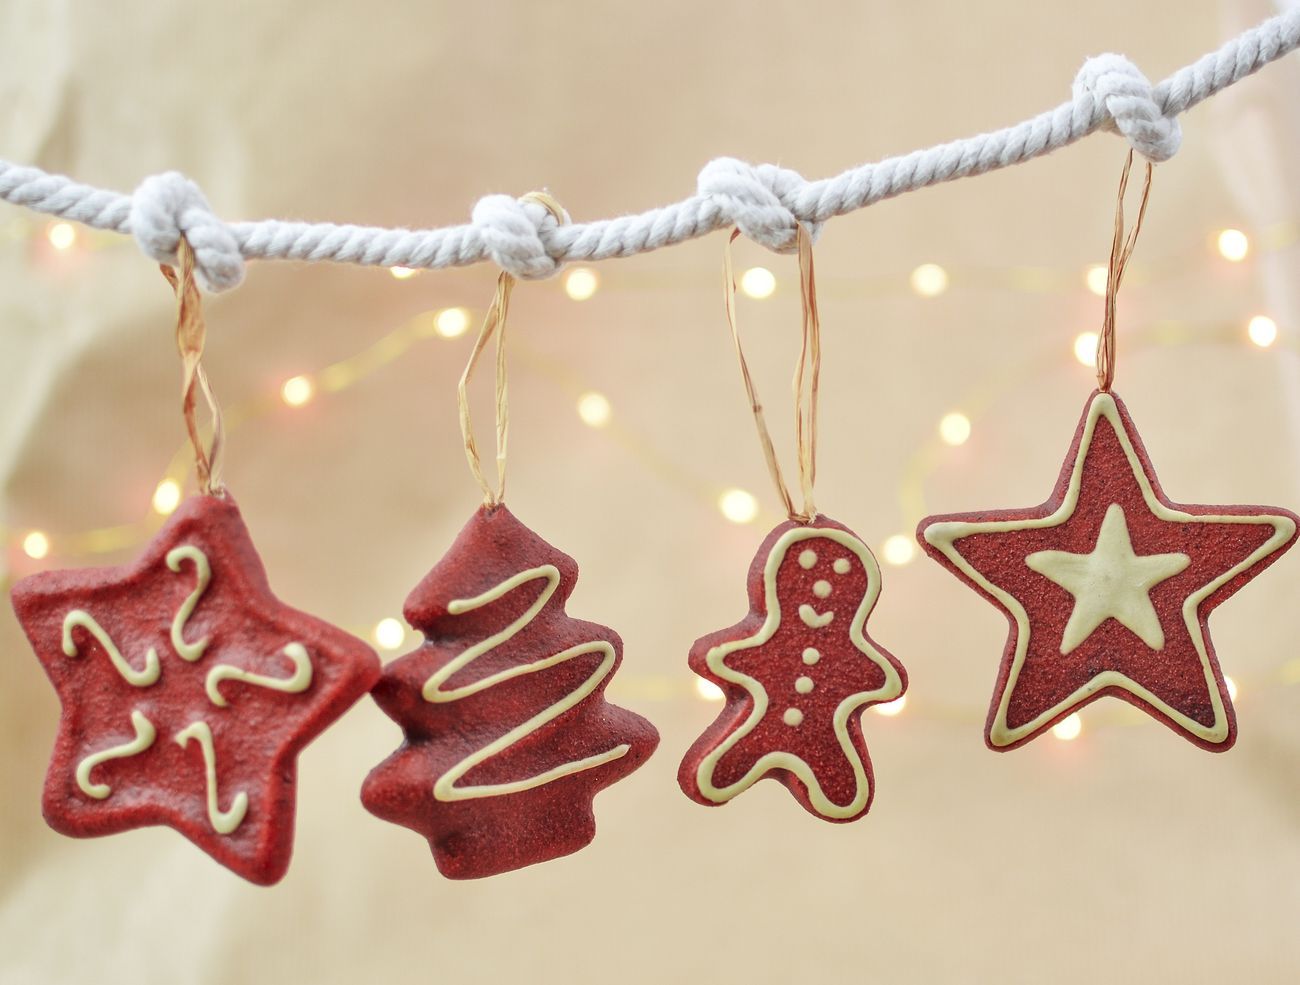 Free christmas decoration photo|Free Christmas presents image|Free hot chocolate